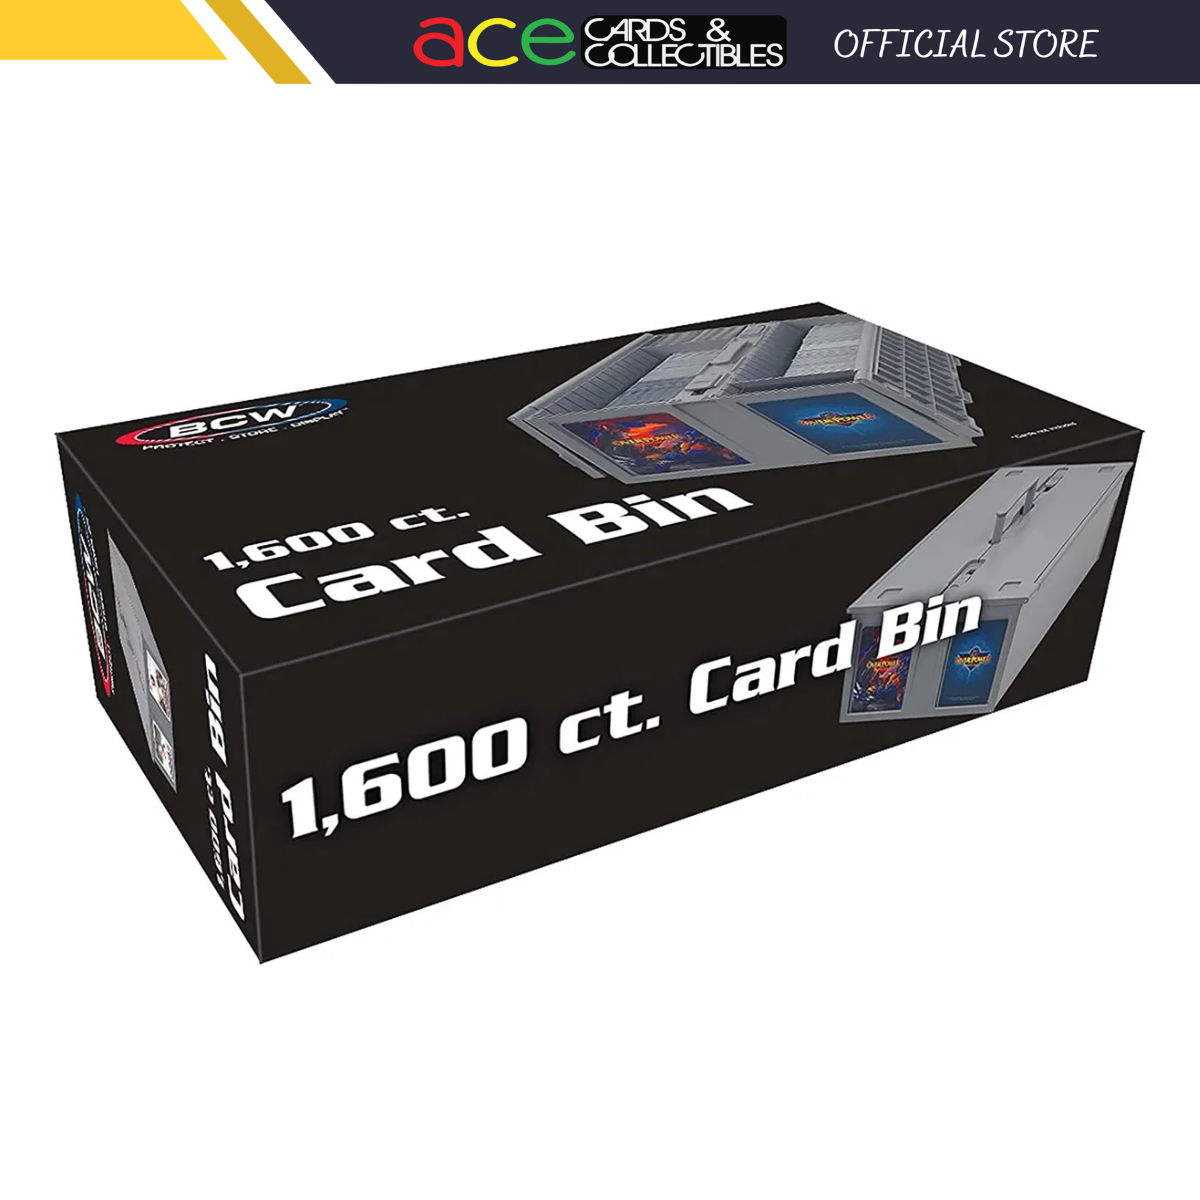 BCW Collectible Card Bin-1600-GRAY-BCW Supplies-Ace Cards & Collectibles